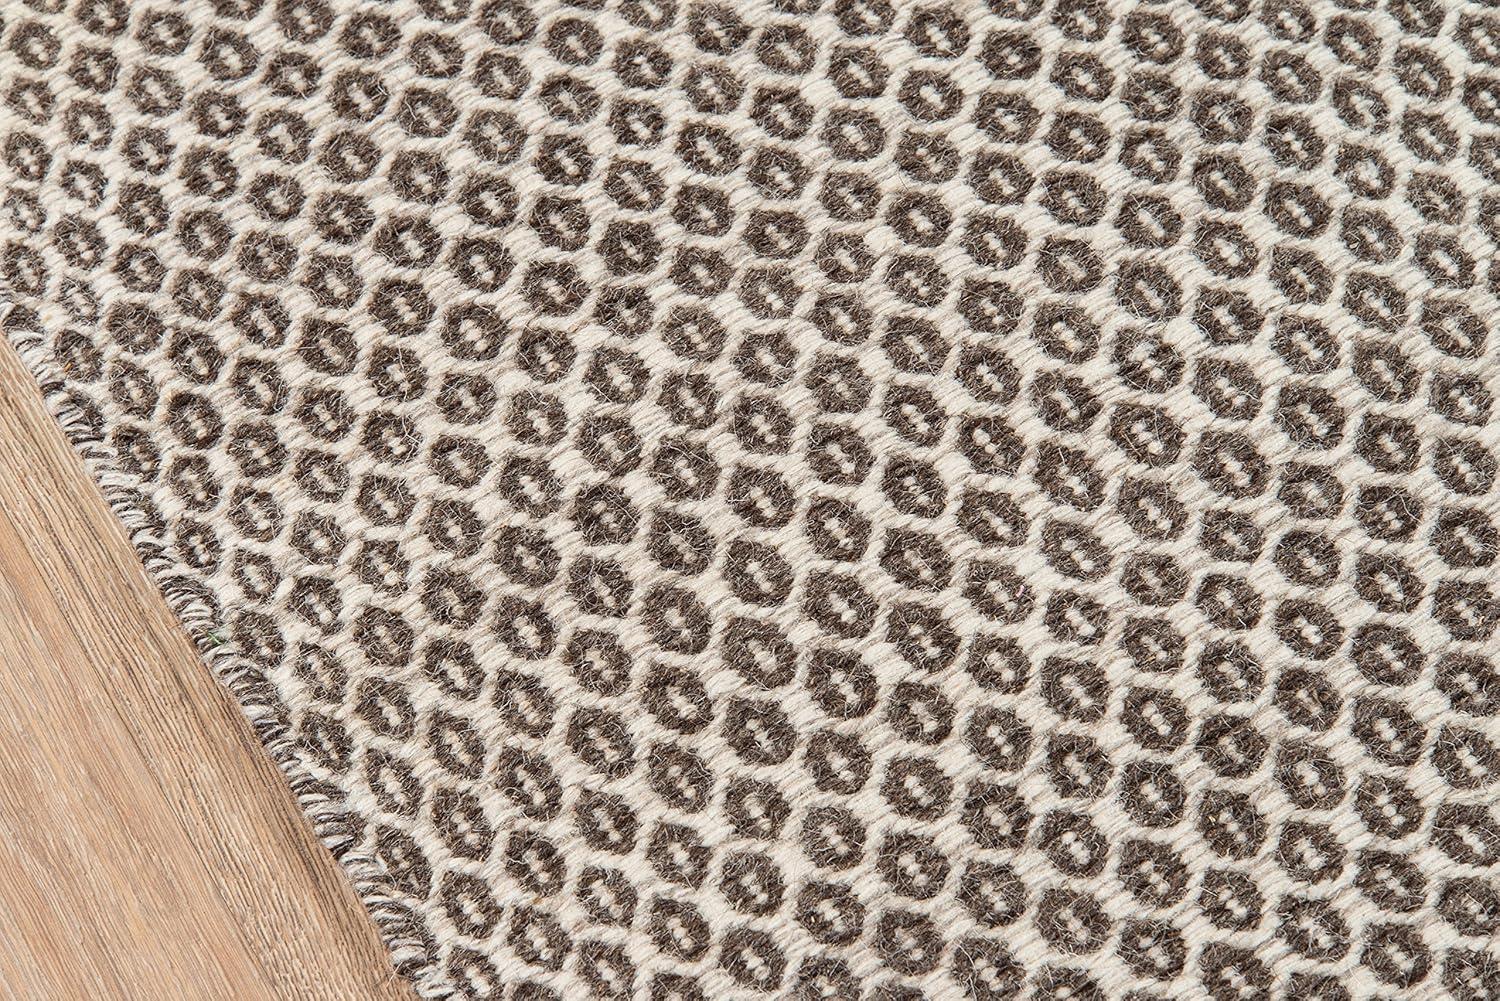 Handwoven Geometric Gray Wool Area Rug, 3'6" x 5'6"